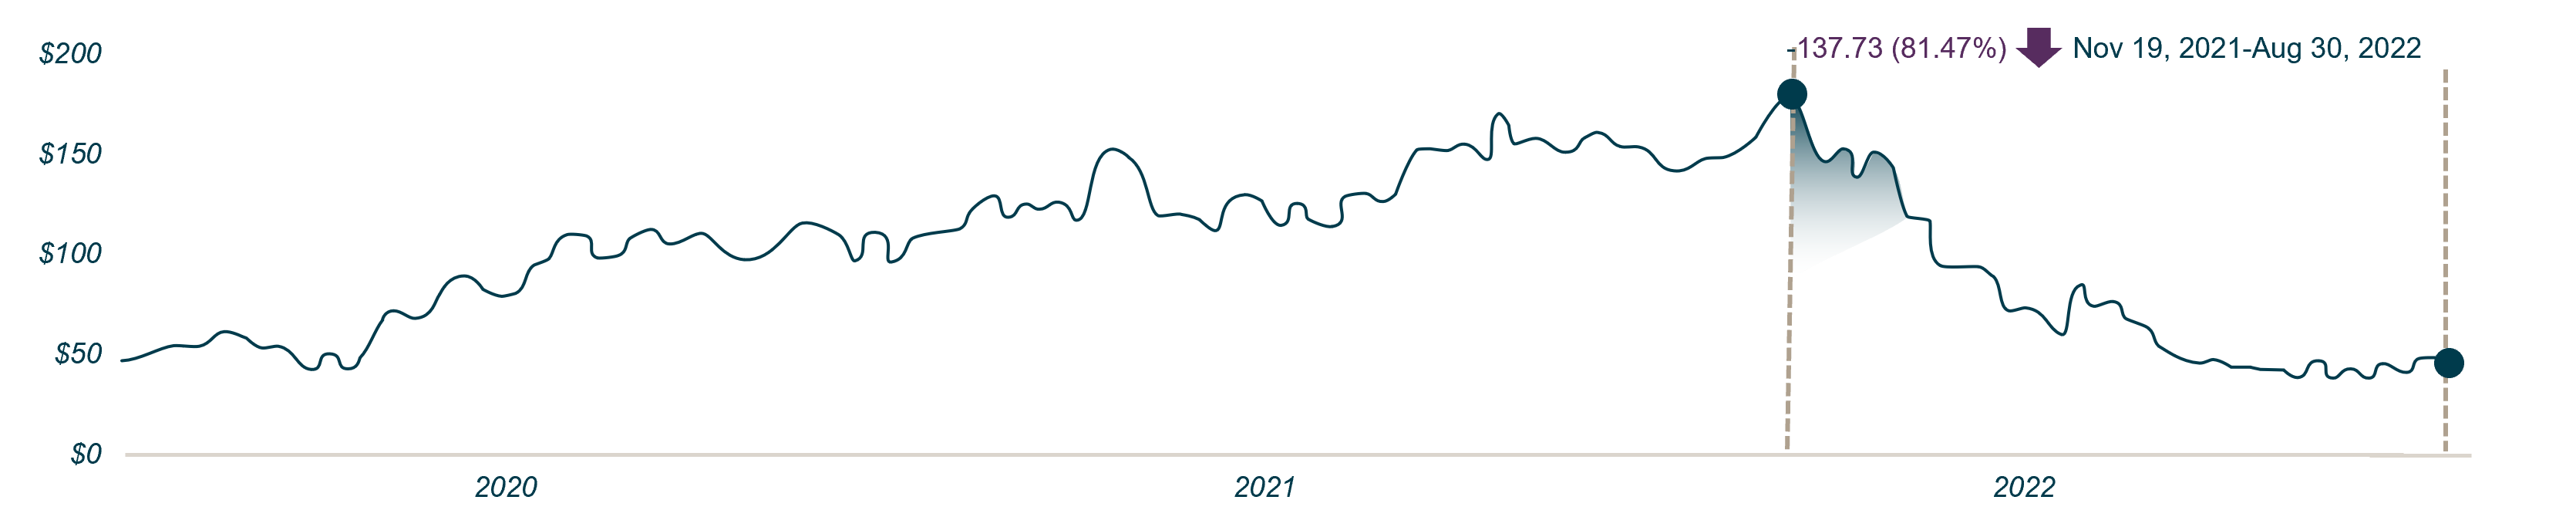 Shopify chart 2020-2022